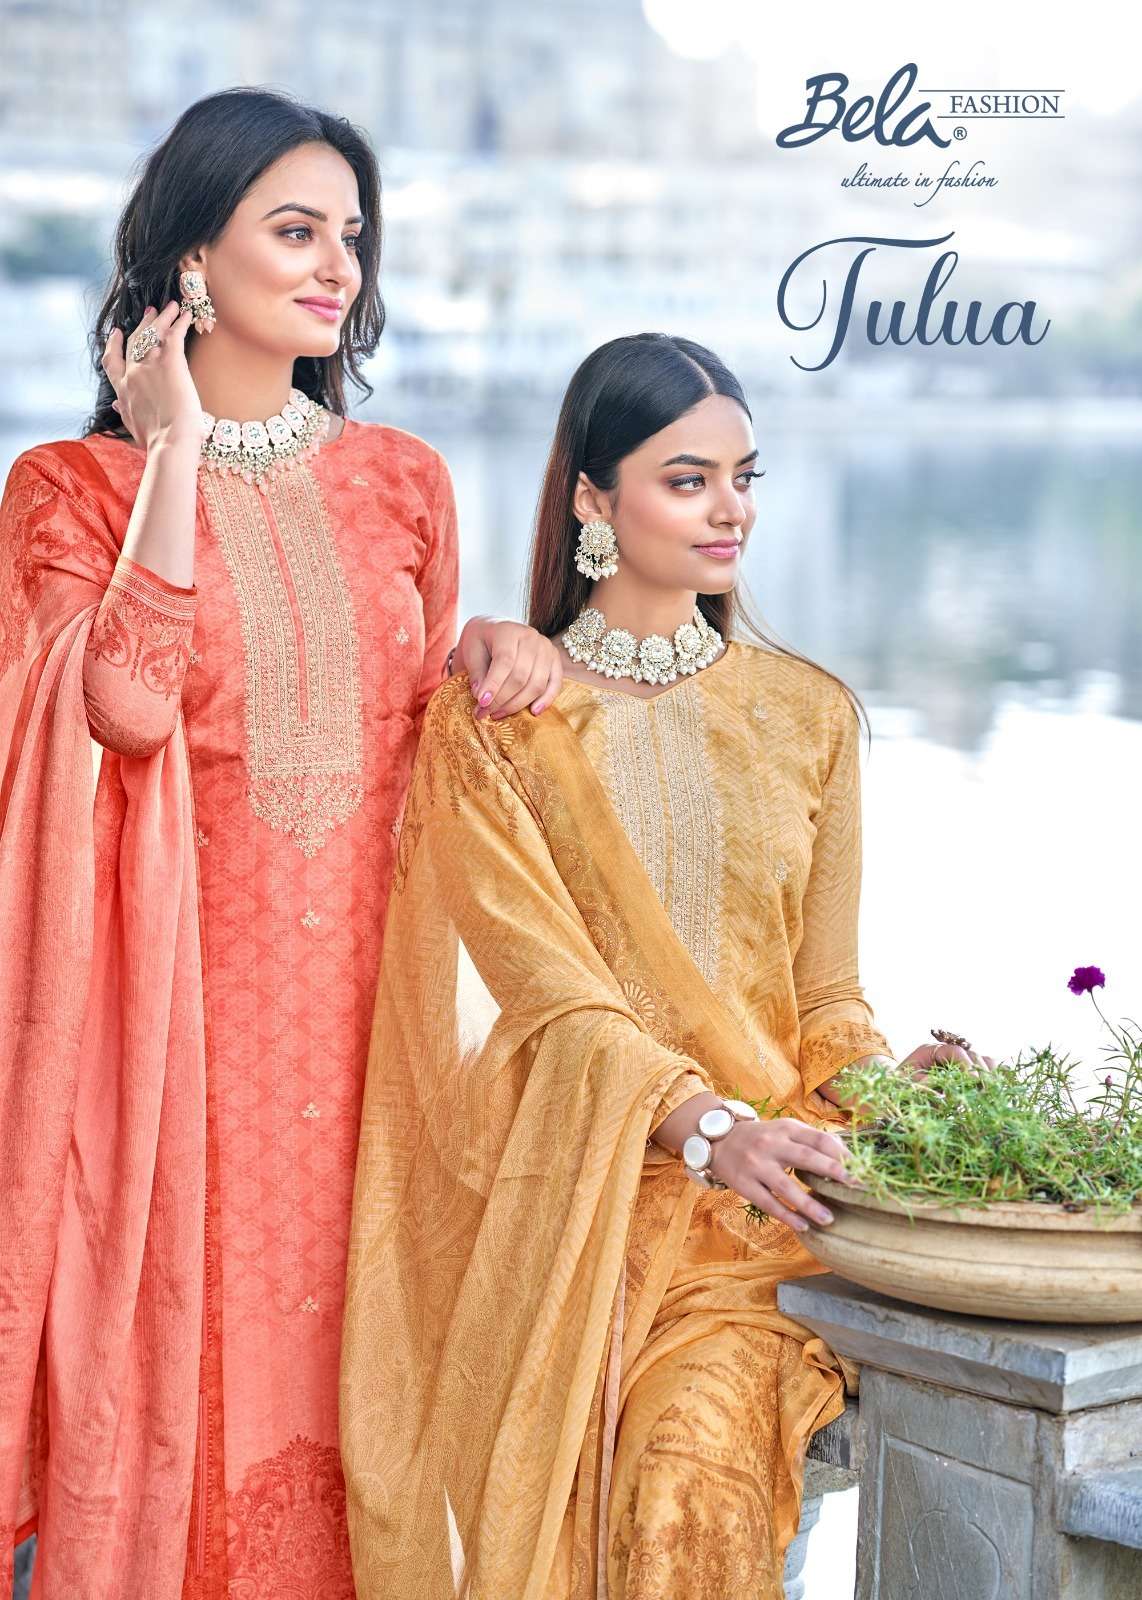 bela fashion present tulua fabulous digital printed salwar kameez collection 